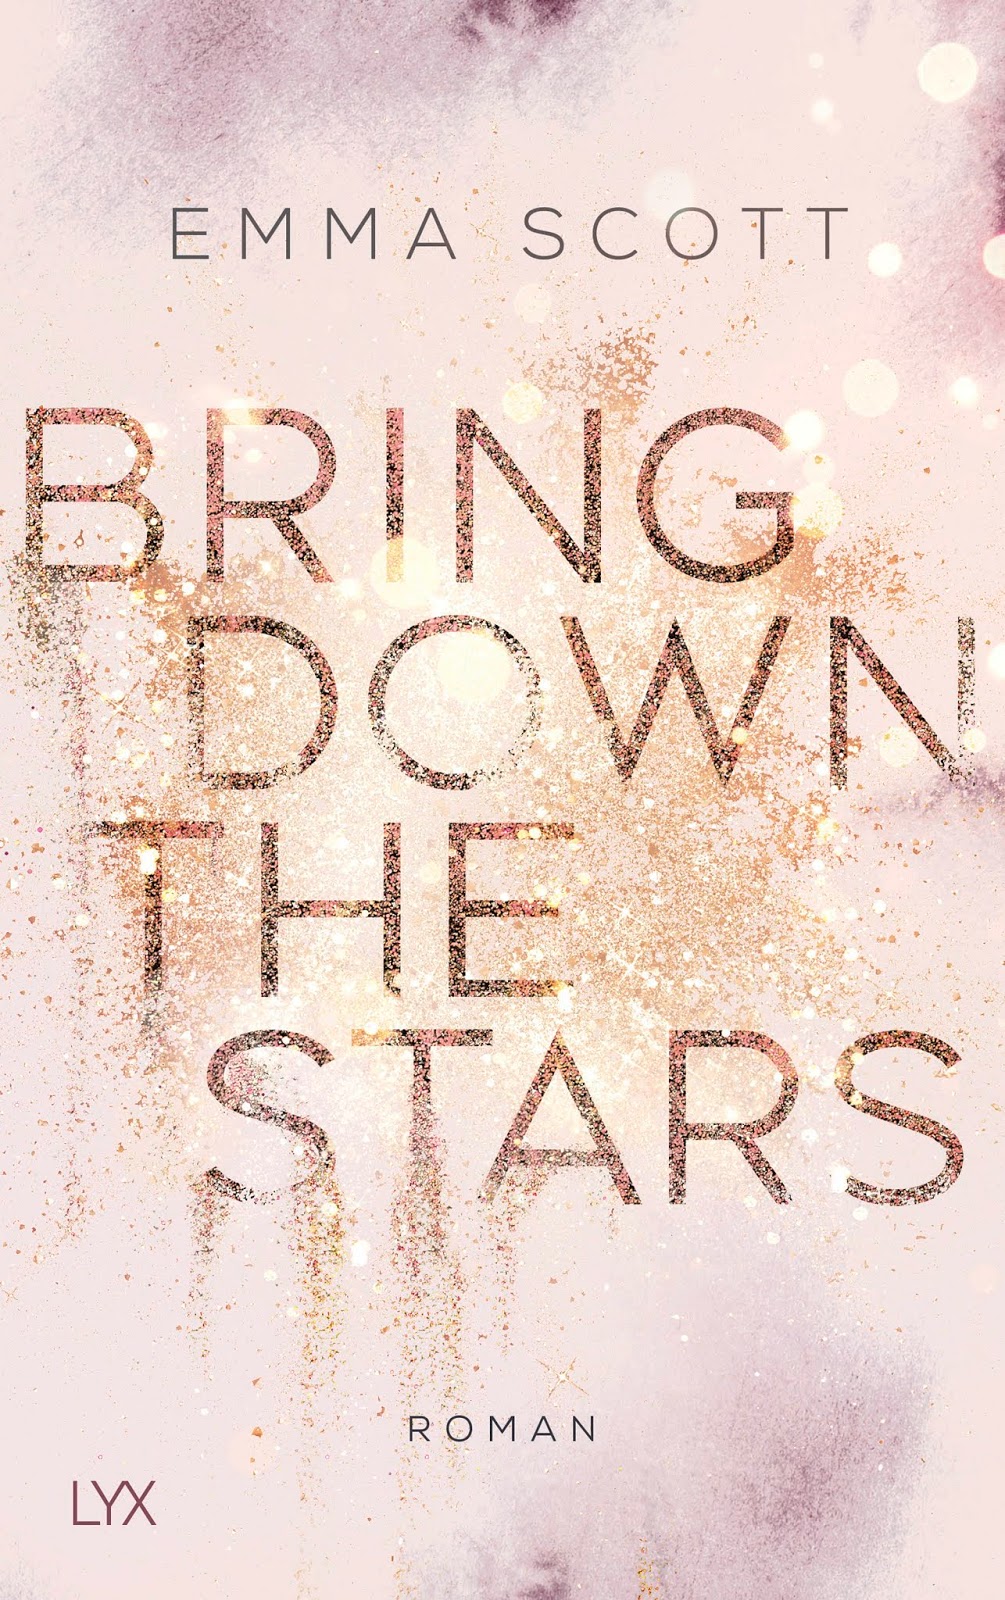 Bring Down the Stars Emma Scott Book Cover